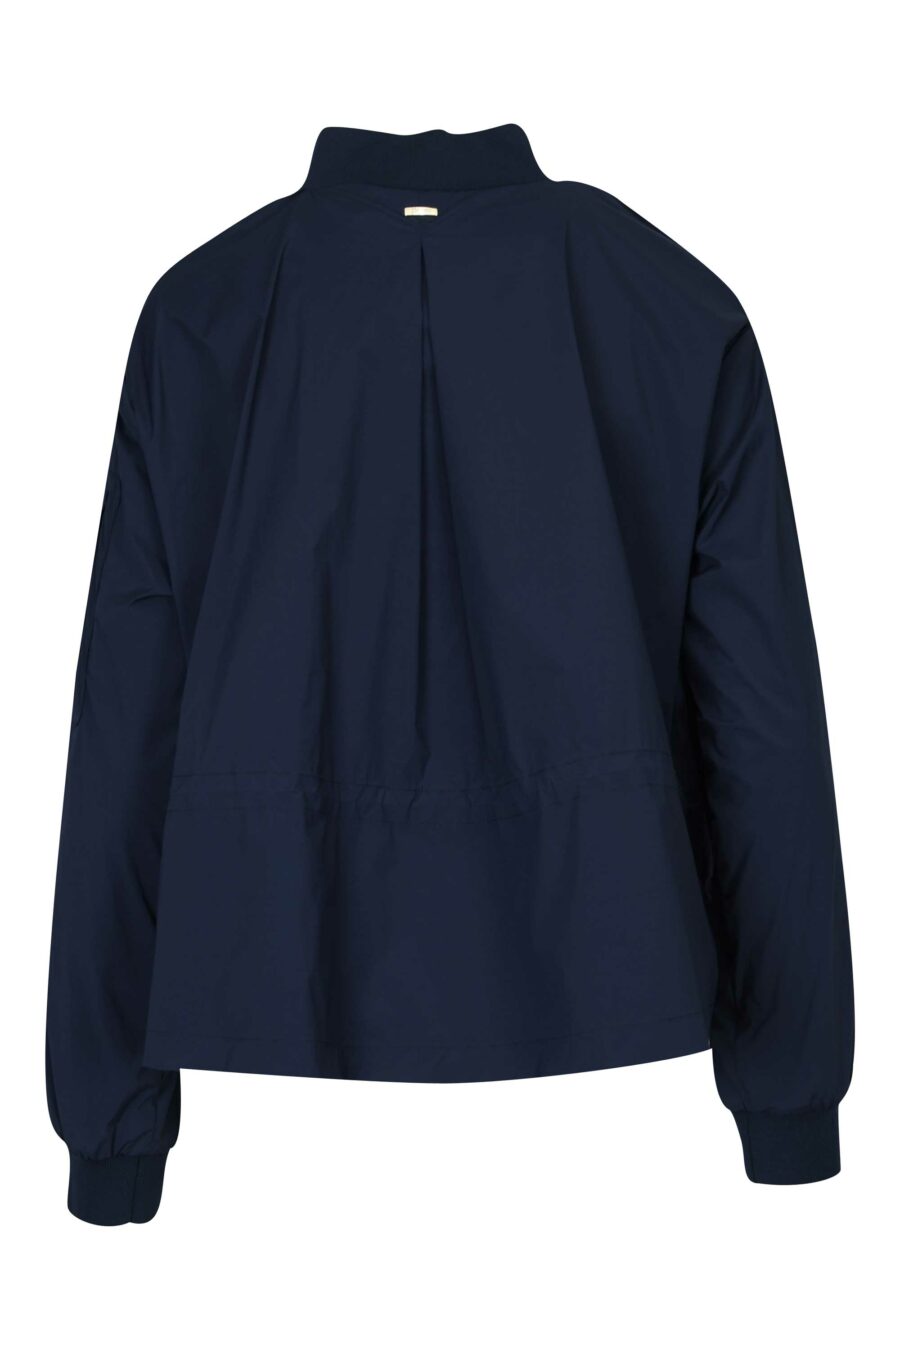 Blaue gewebte Jacke mit Mini-Logo - 8055721982335 1